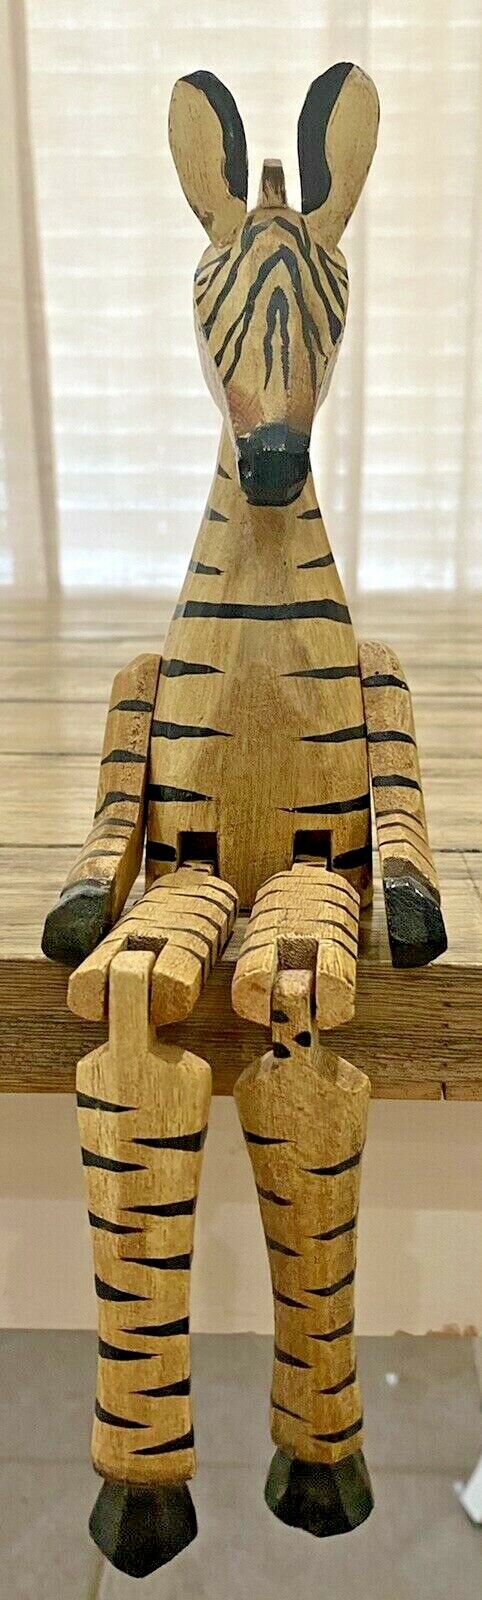 Zebra Shelf Sitter Jointed Handcrafted Wooden Folk Art Primitive